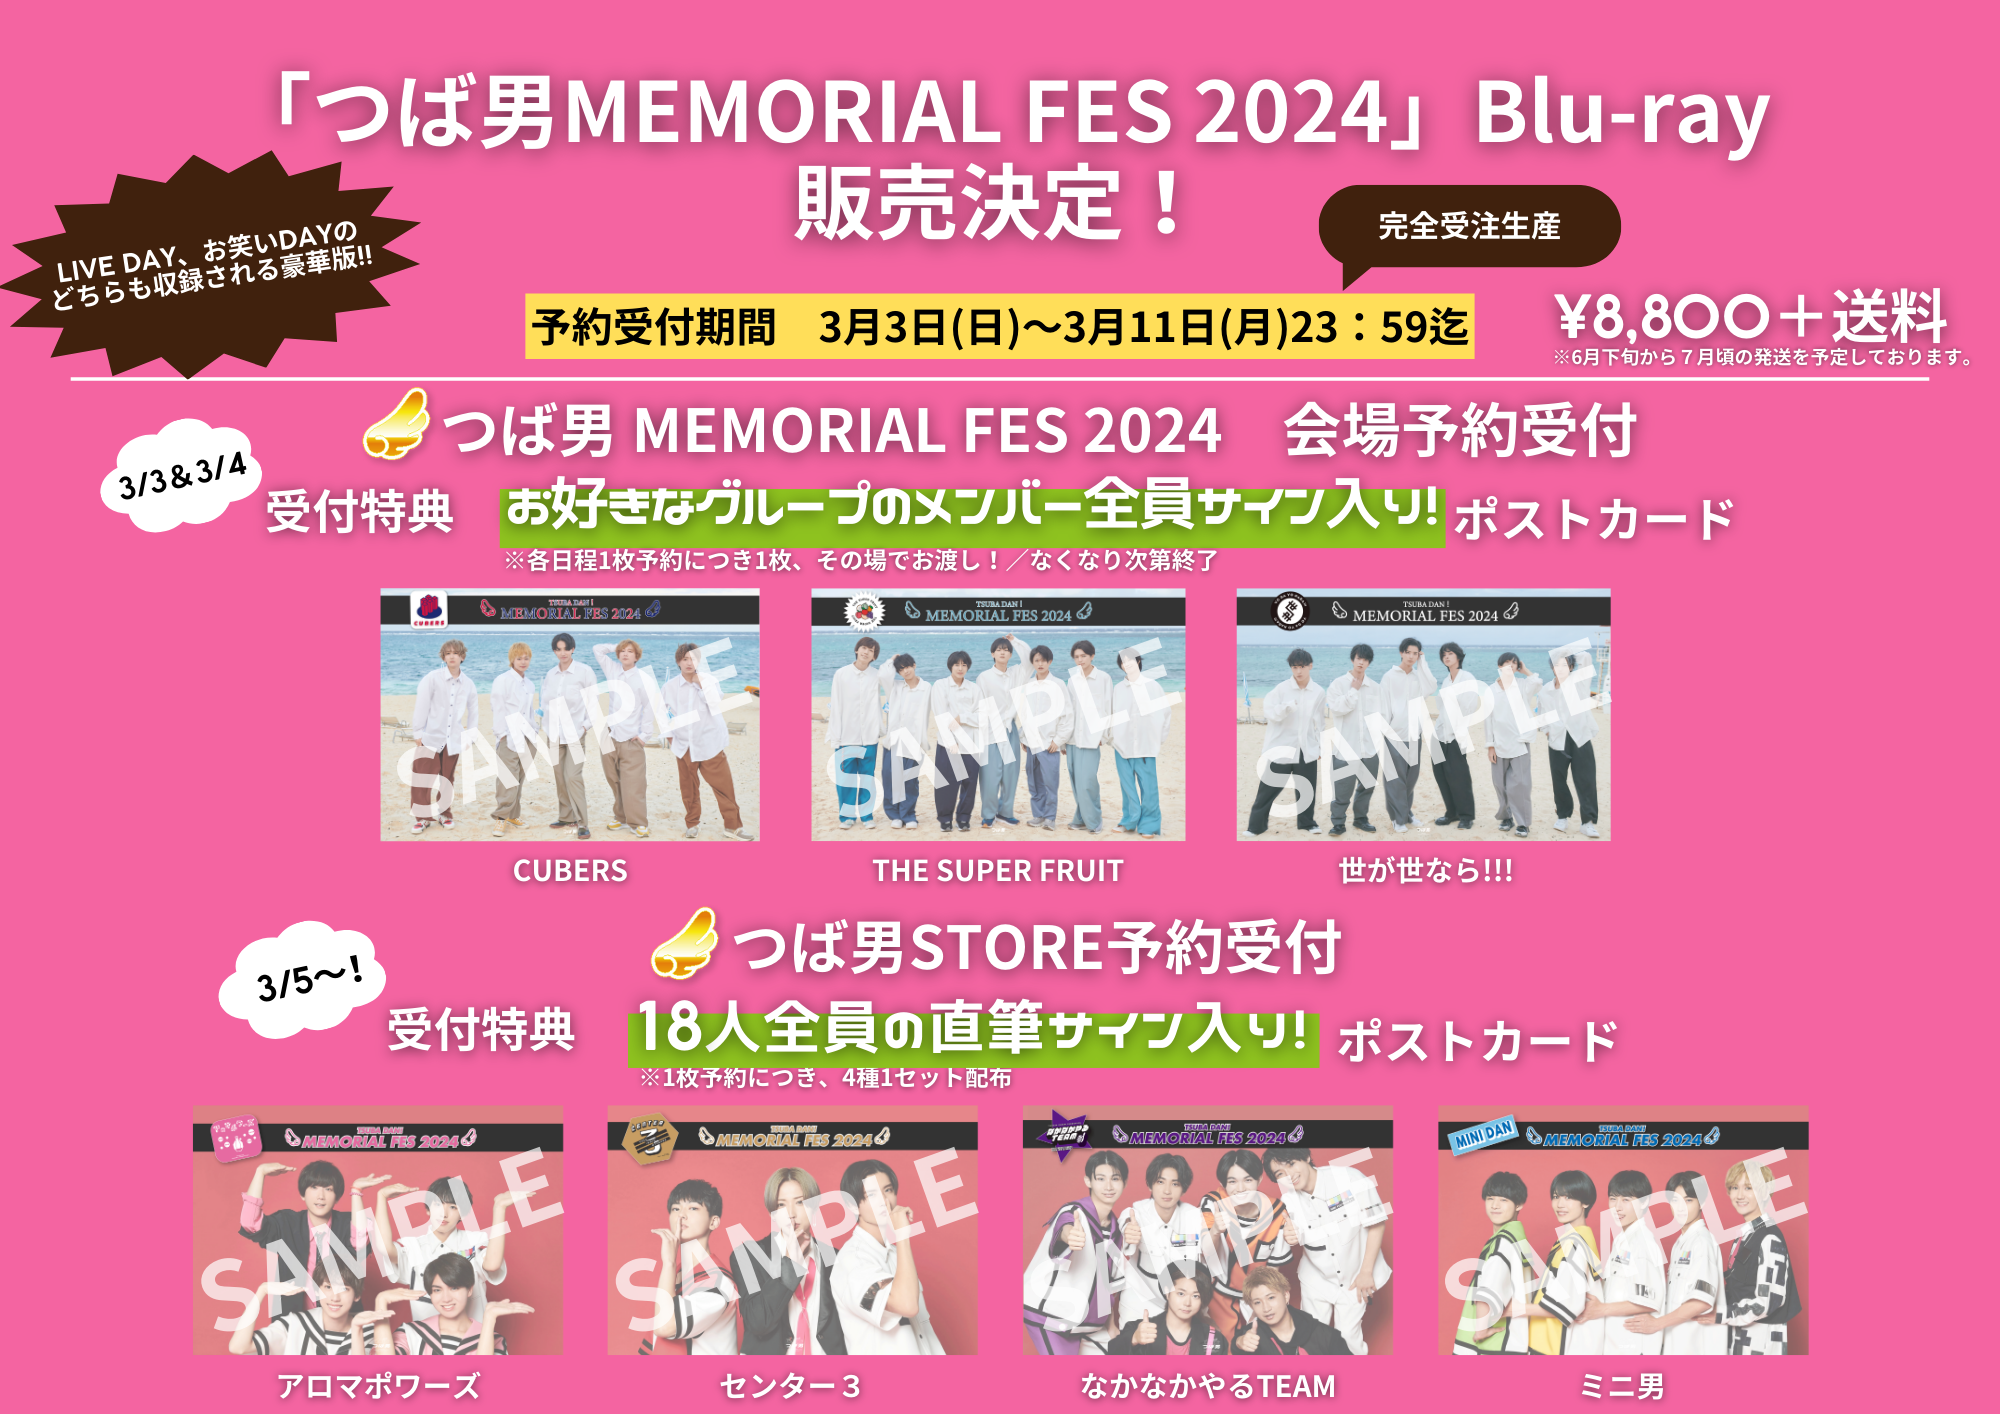 【NEWS2】3月3日(日)&3月4日(月)開催「つば男MEMORIAL FES 2024」のライブ映像がBlu-rayで発売決定！